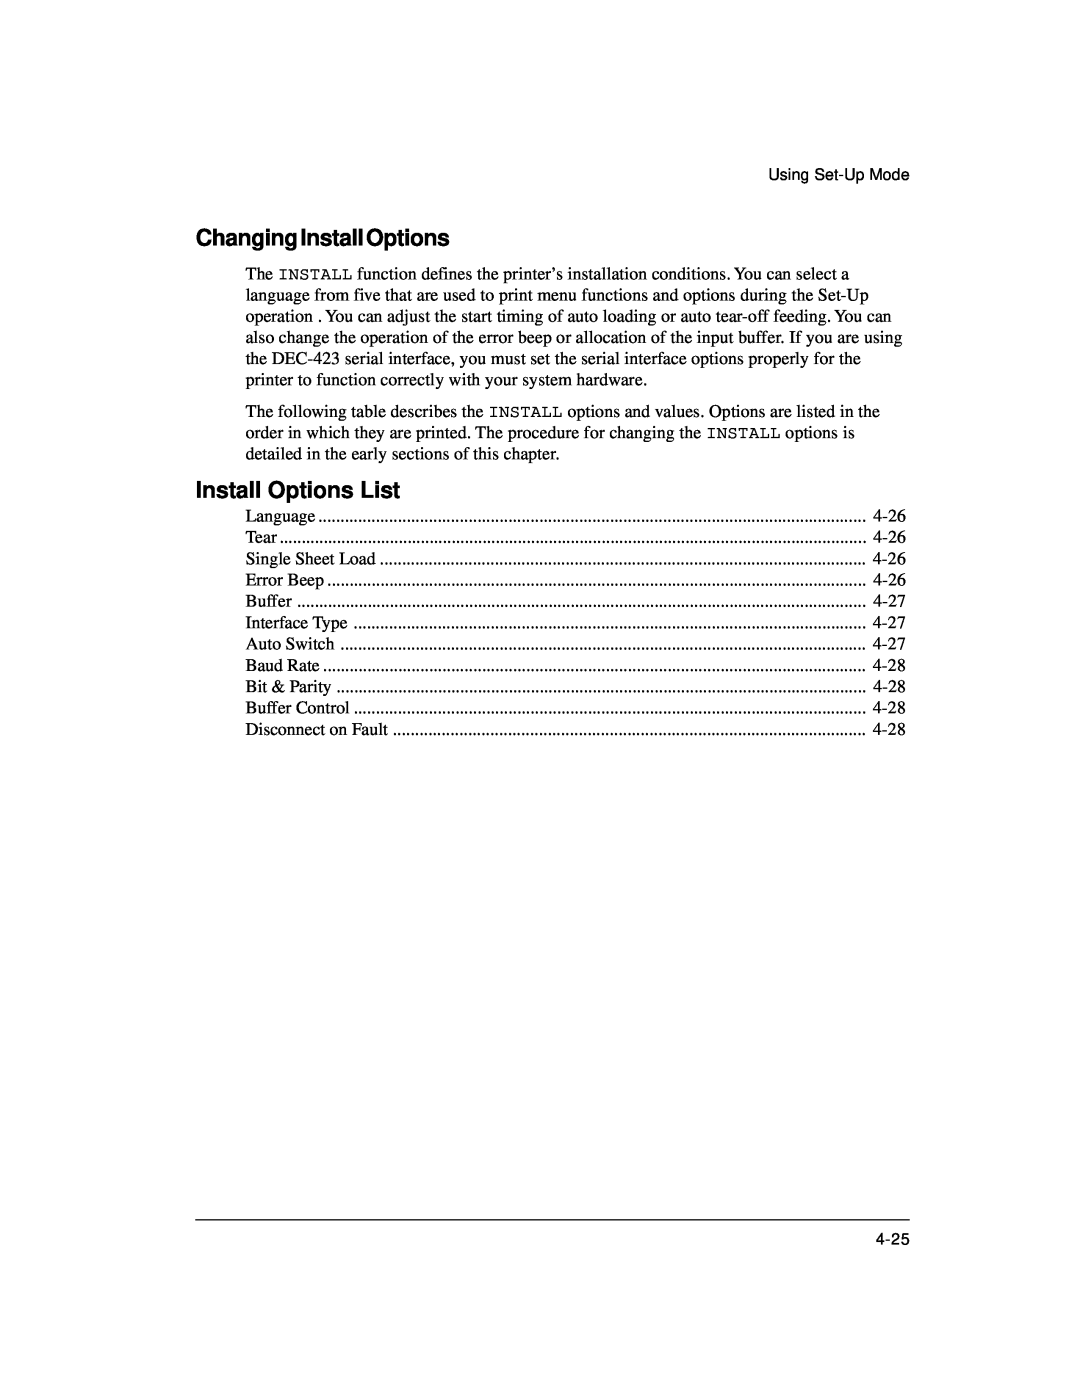 Genicom LA36 manual Changing Install Options, Install Options List 